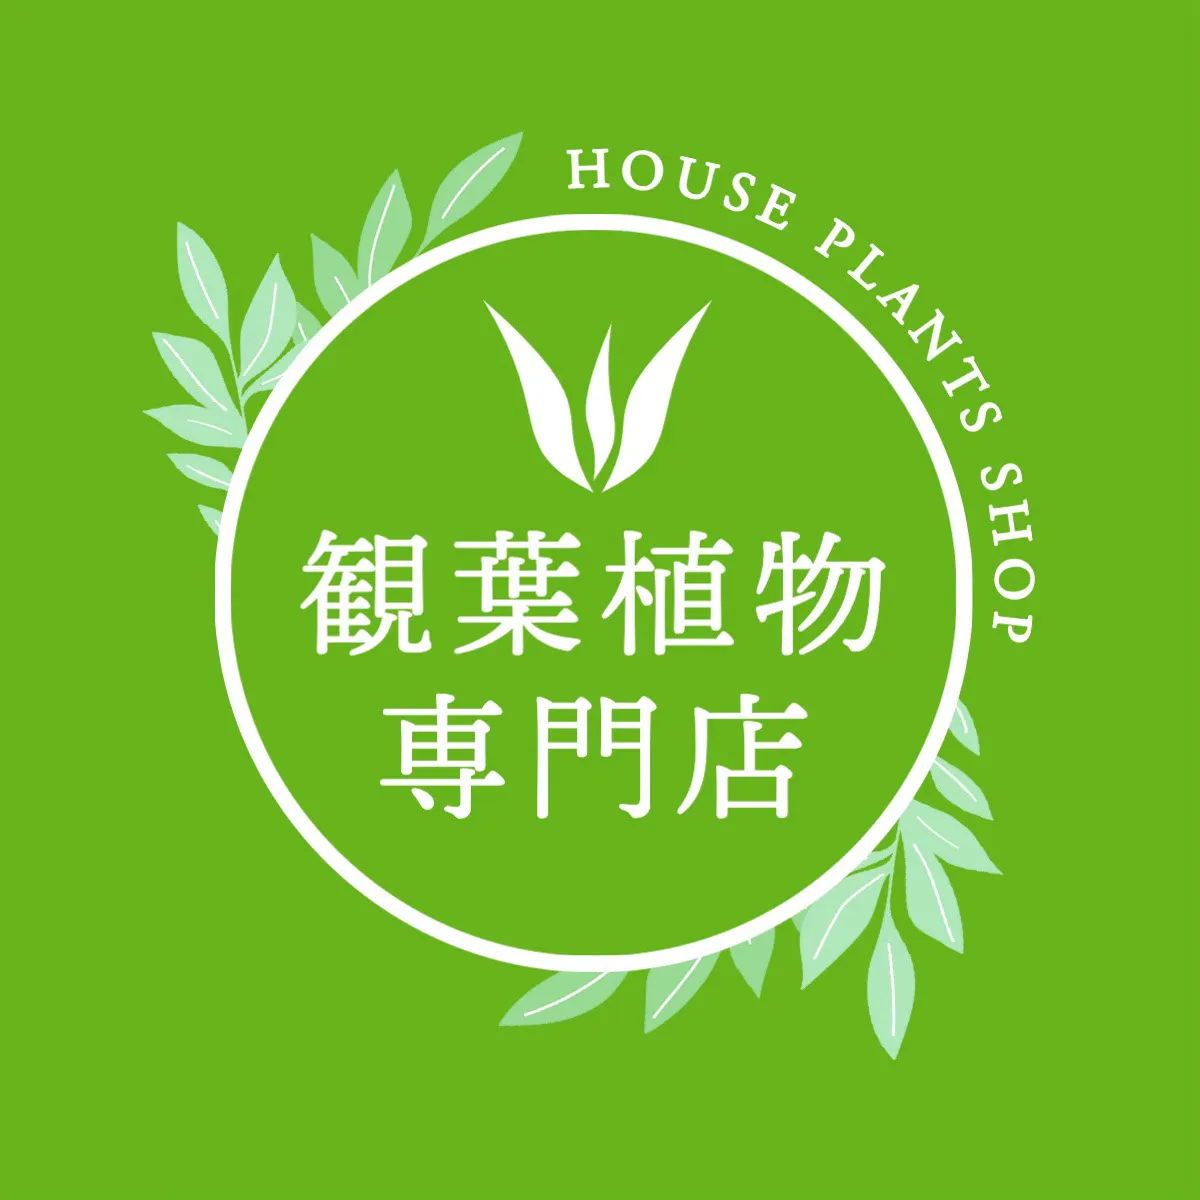 House plants shop circle logo